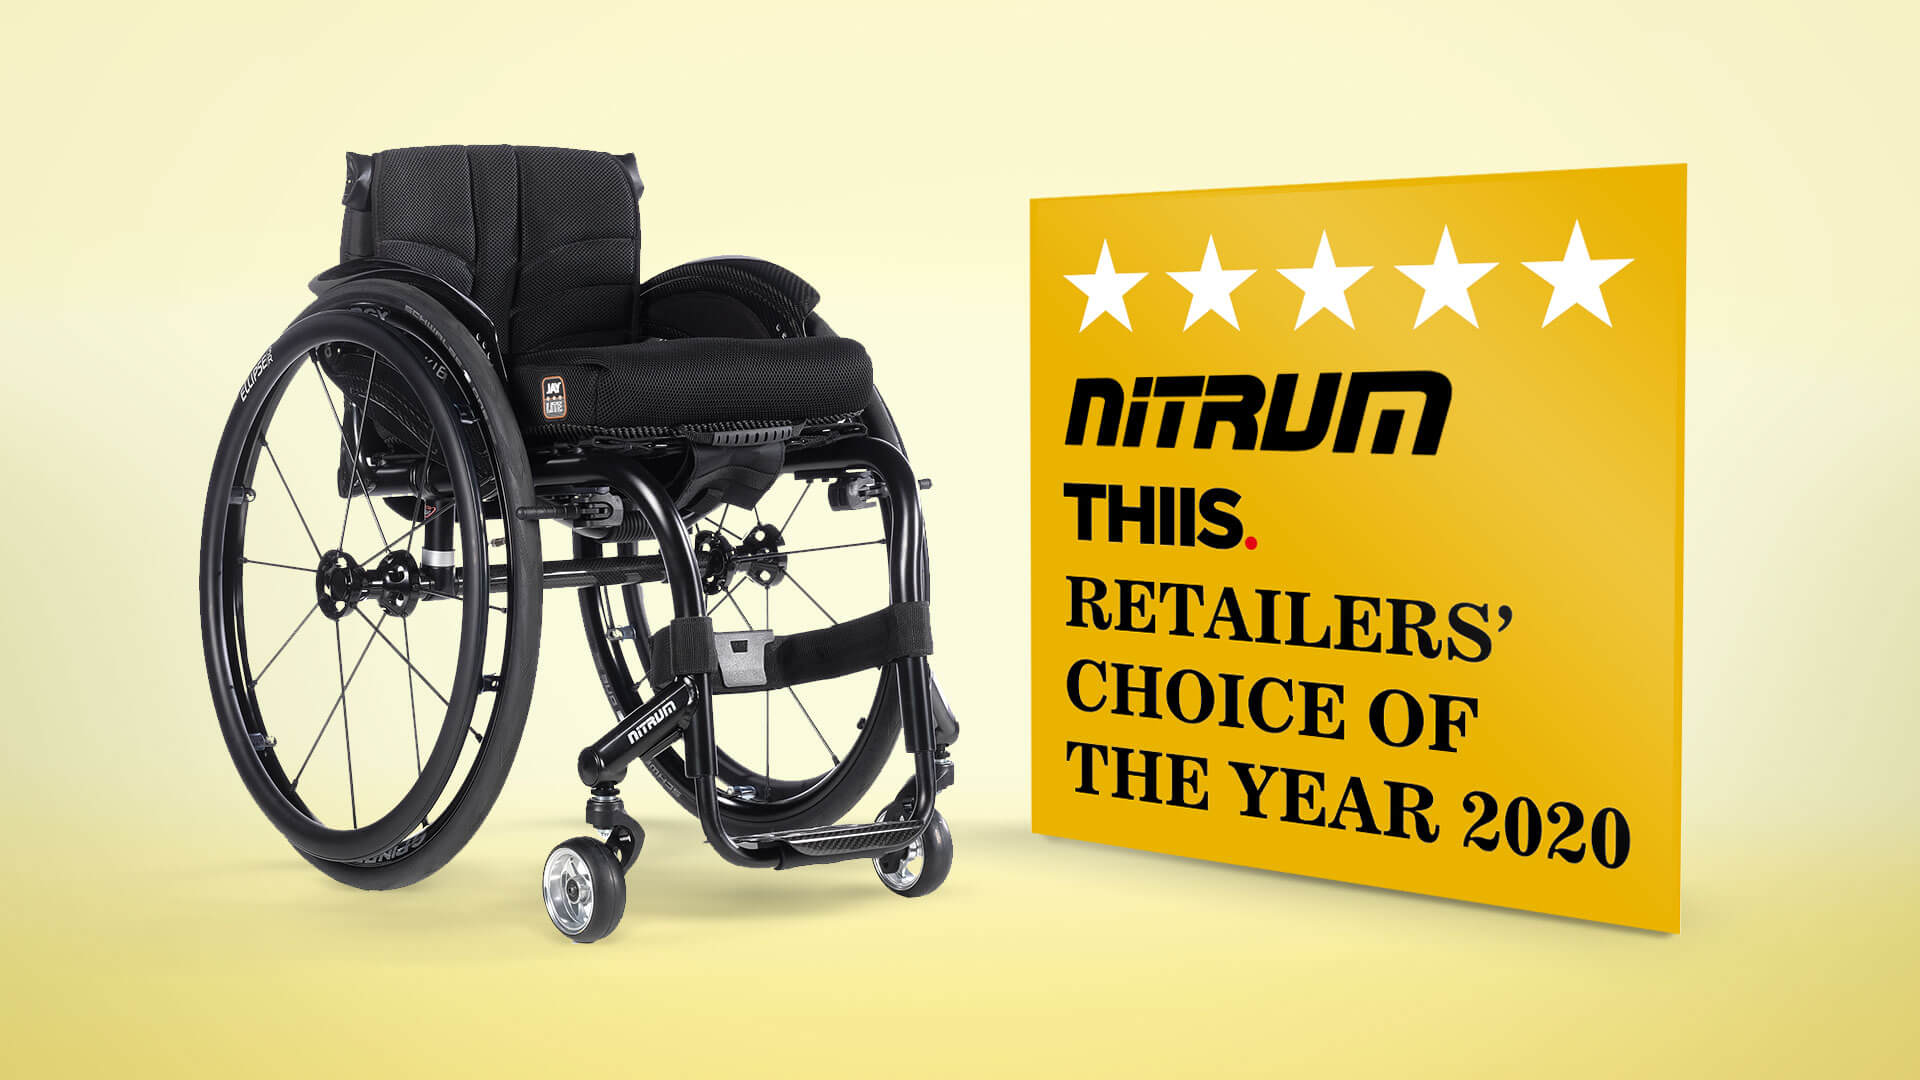 Nitrum Wins Retailer's Choice of the Year 2020